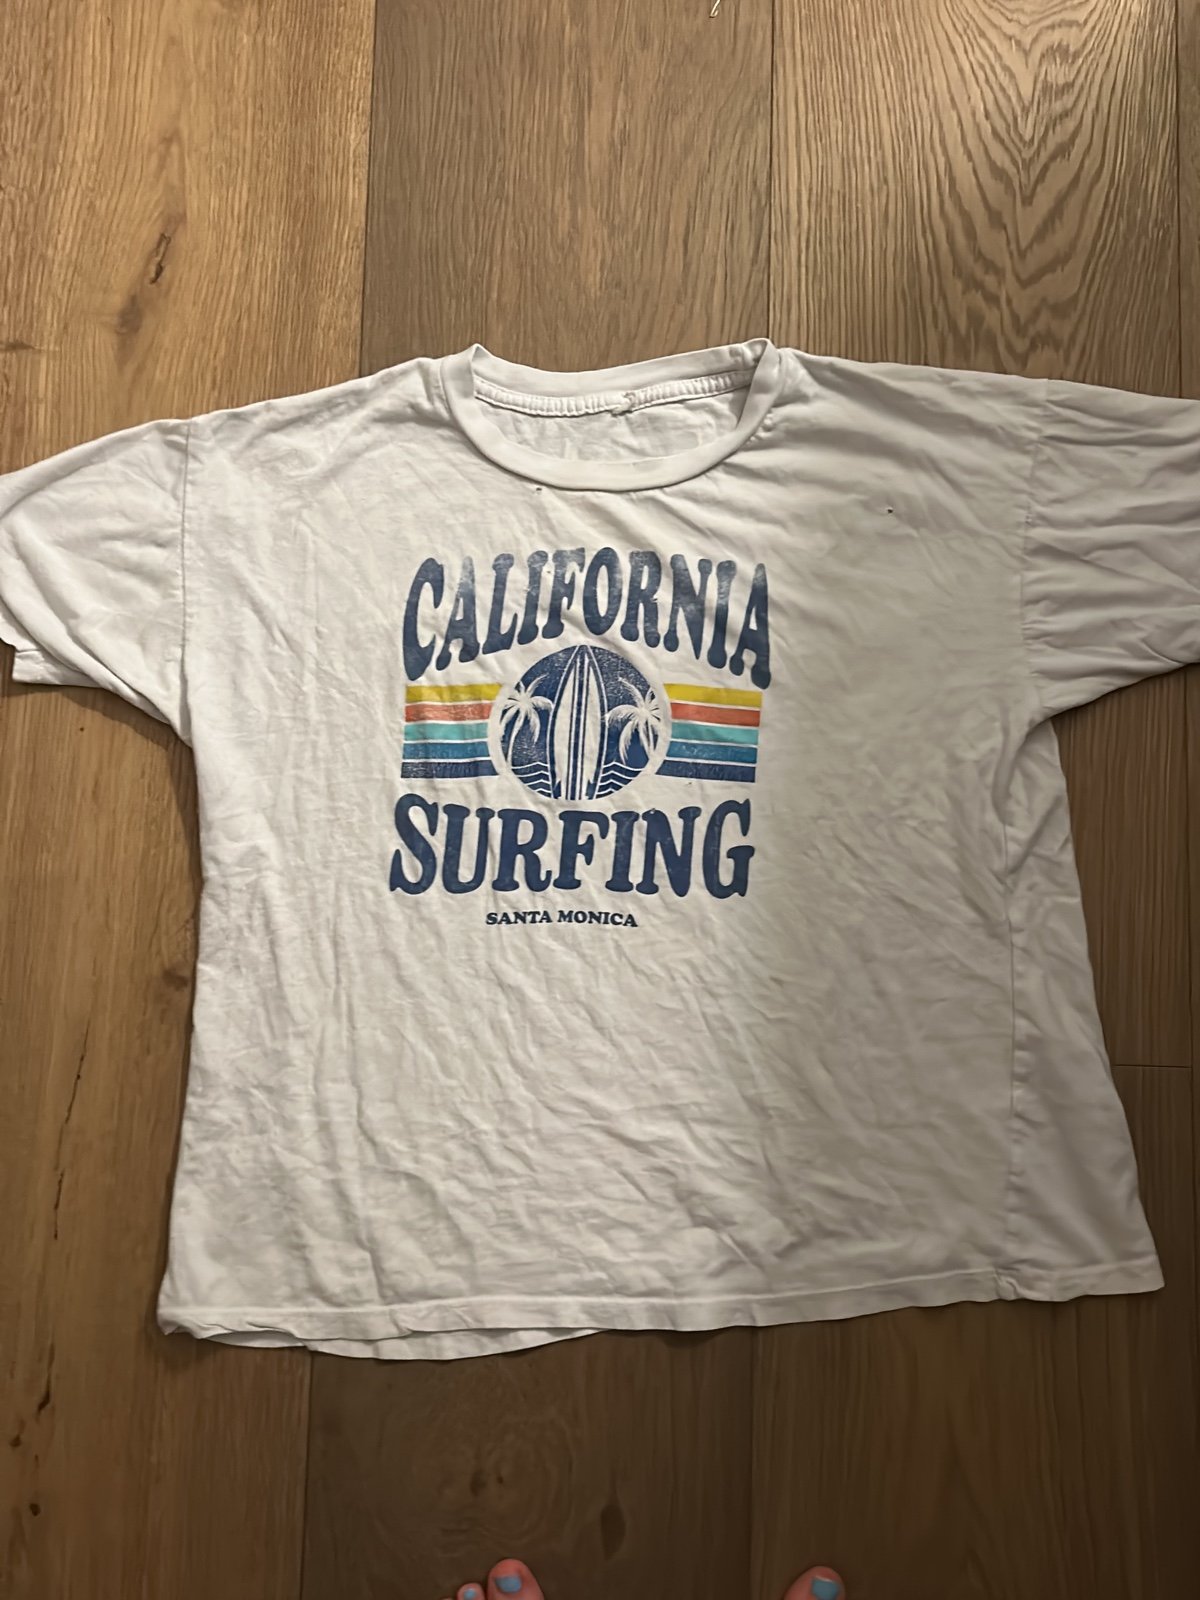 Cheap California t-shirt GzPf78M3f all for you